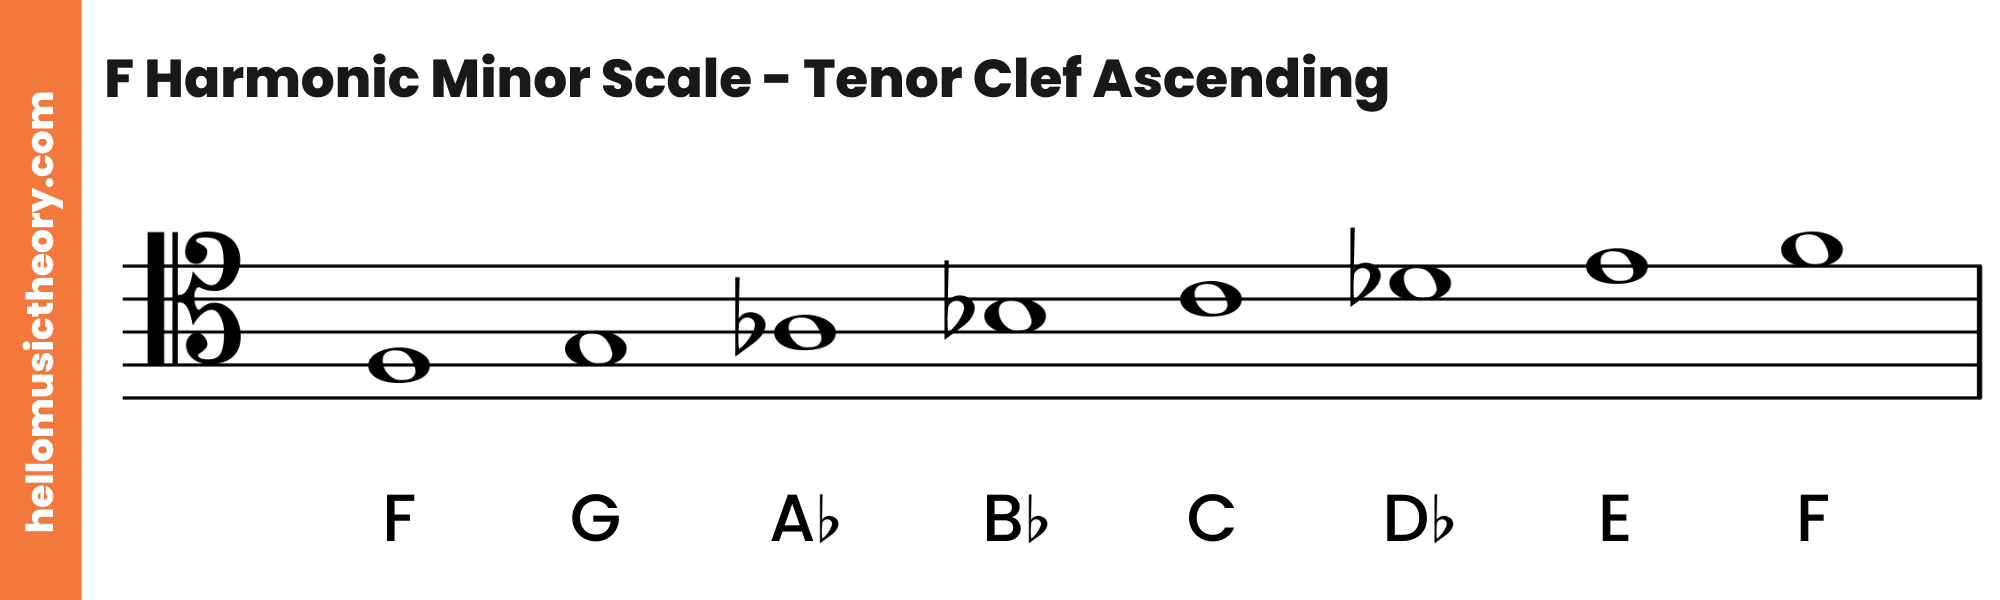 F Harmonic Minor Scale Tenor Clef Ascending